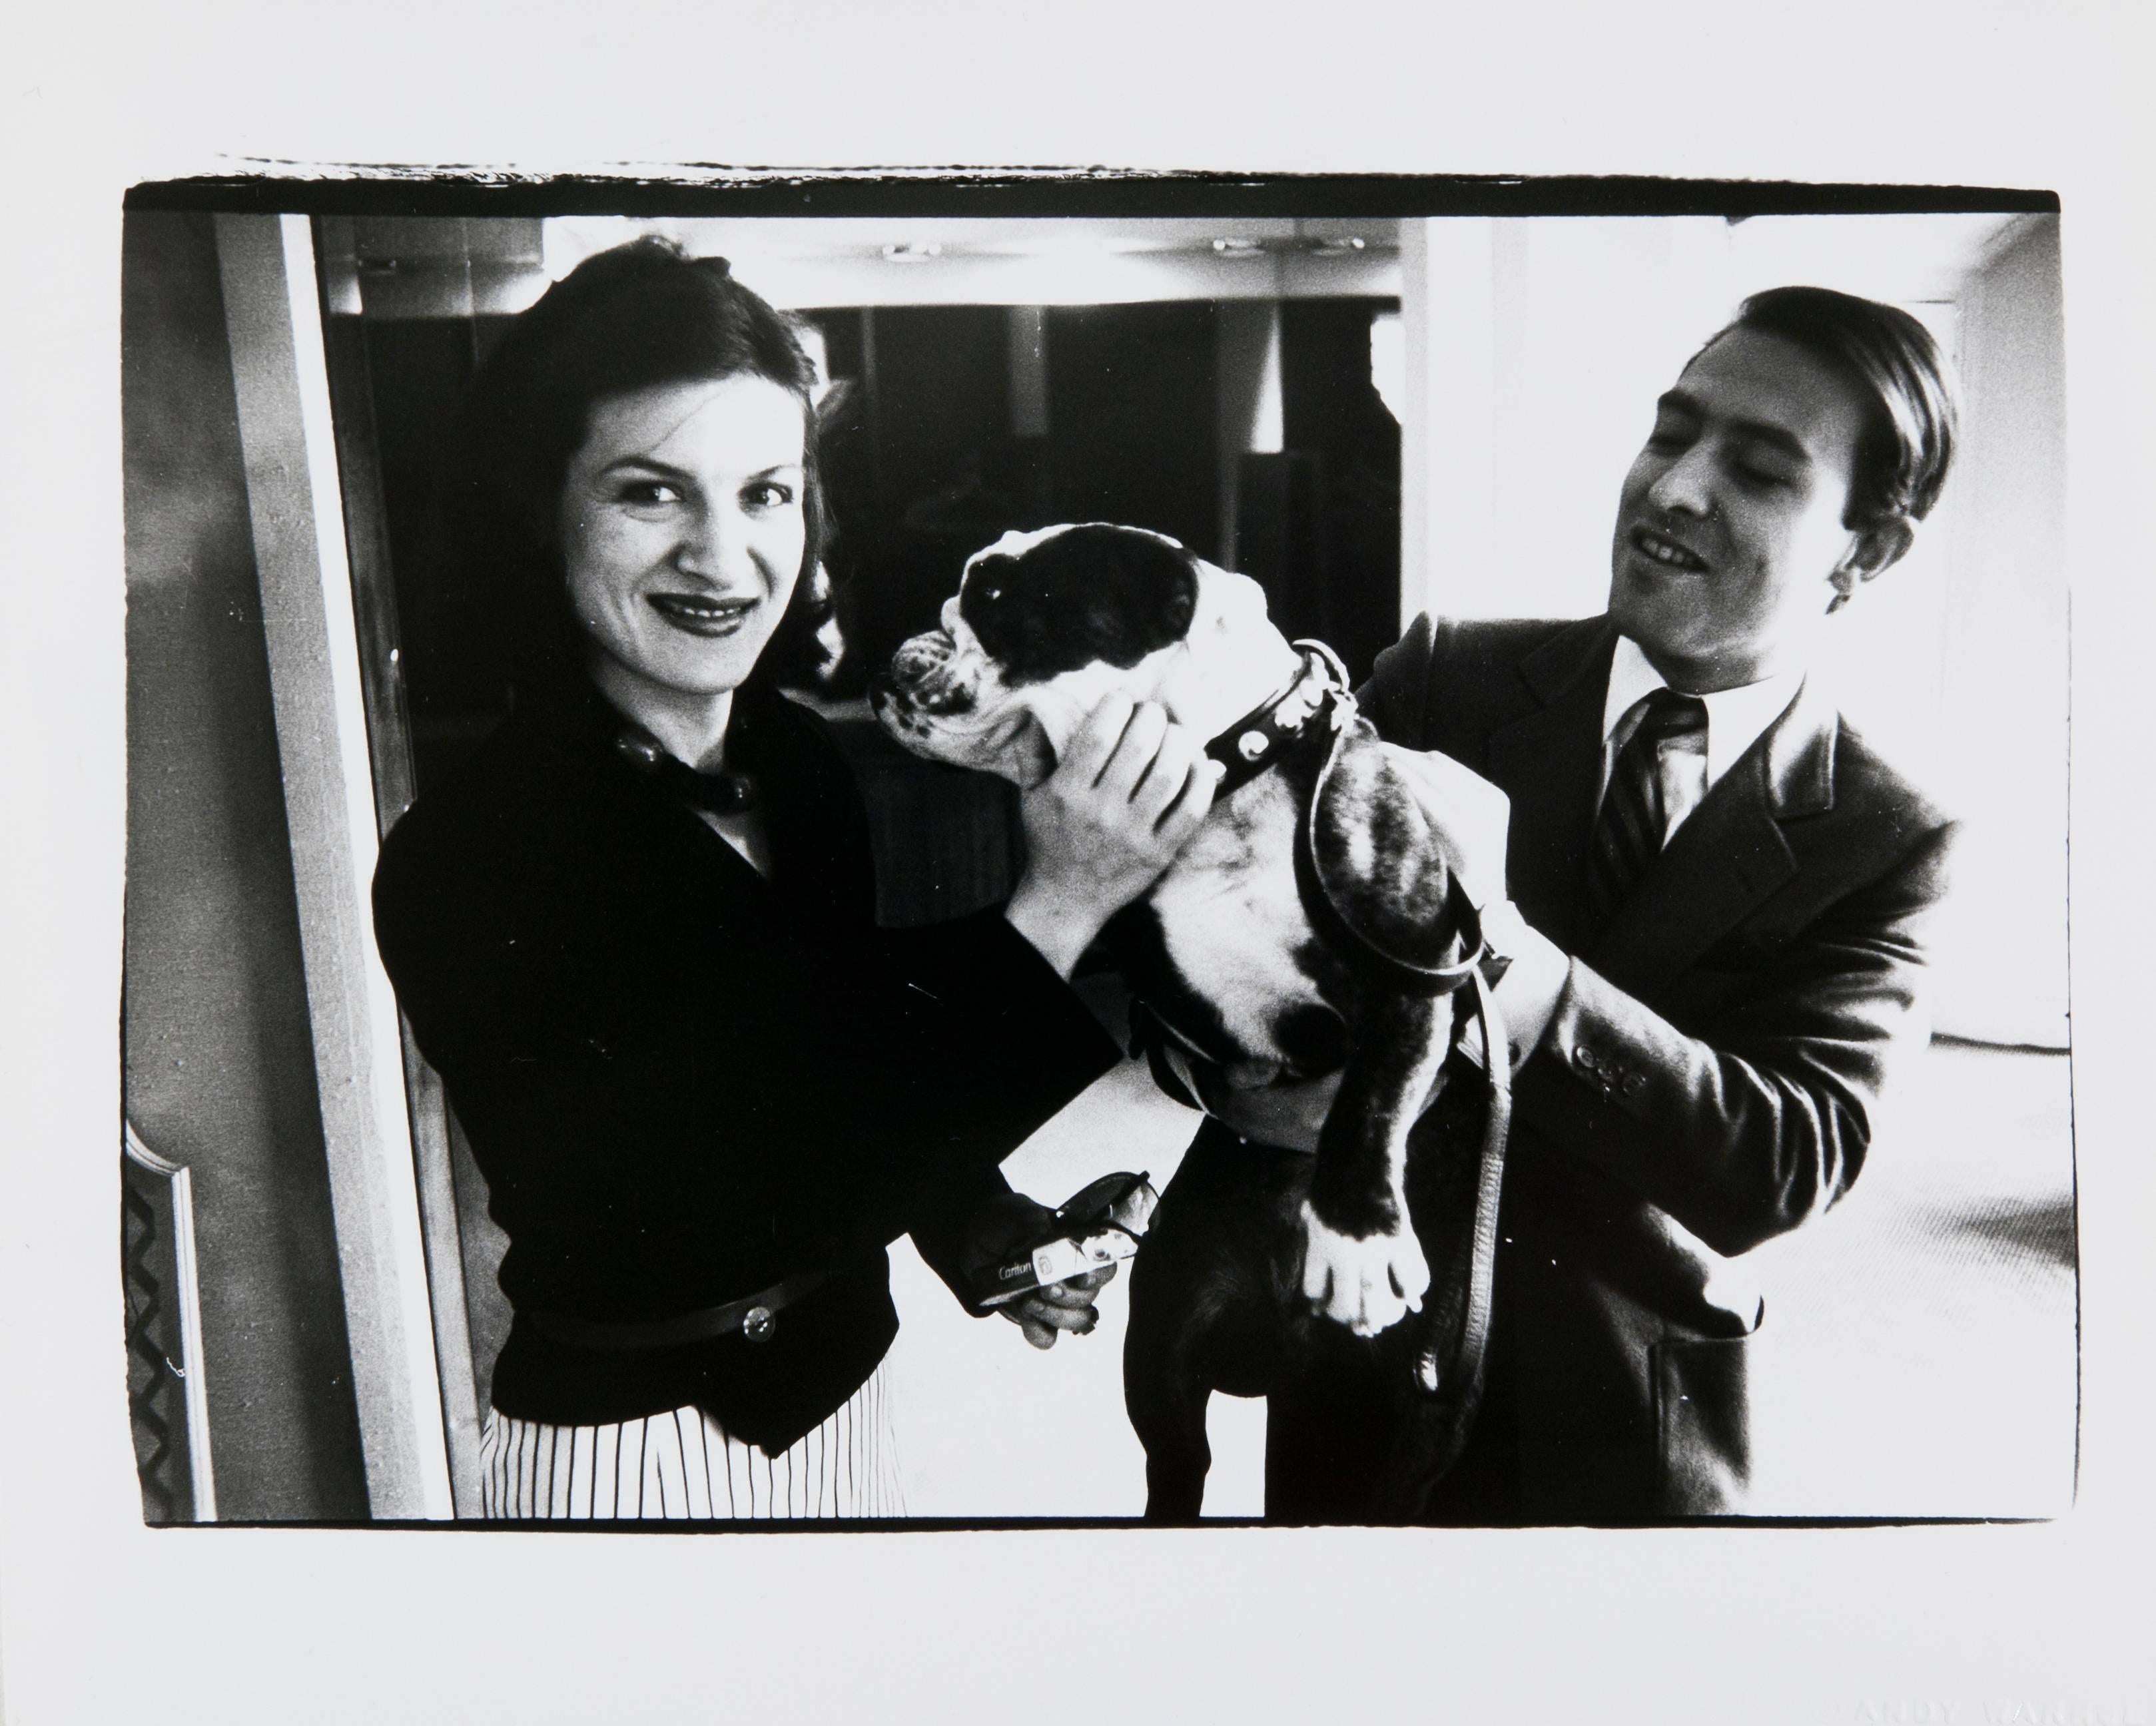 Andy Warhol Portrait Photograph - Paloma Picasso and Raphael Lopez Sanchez with a Dog